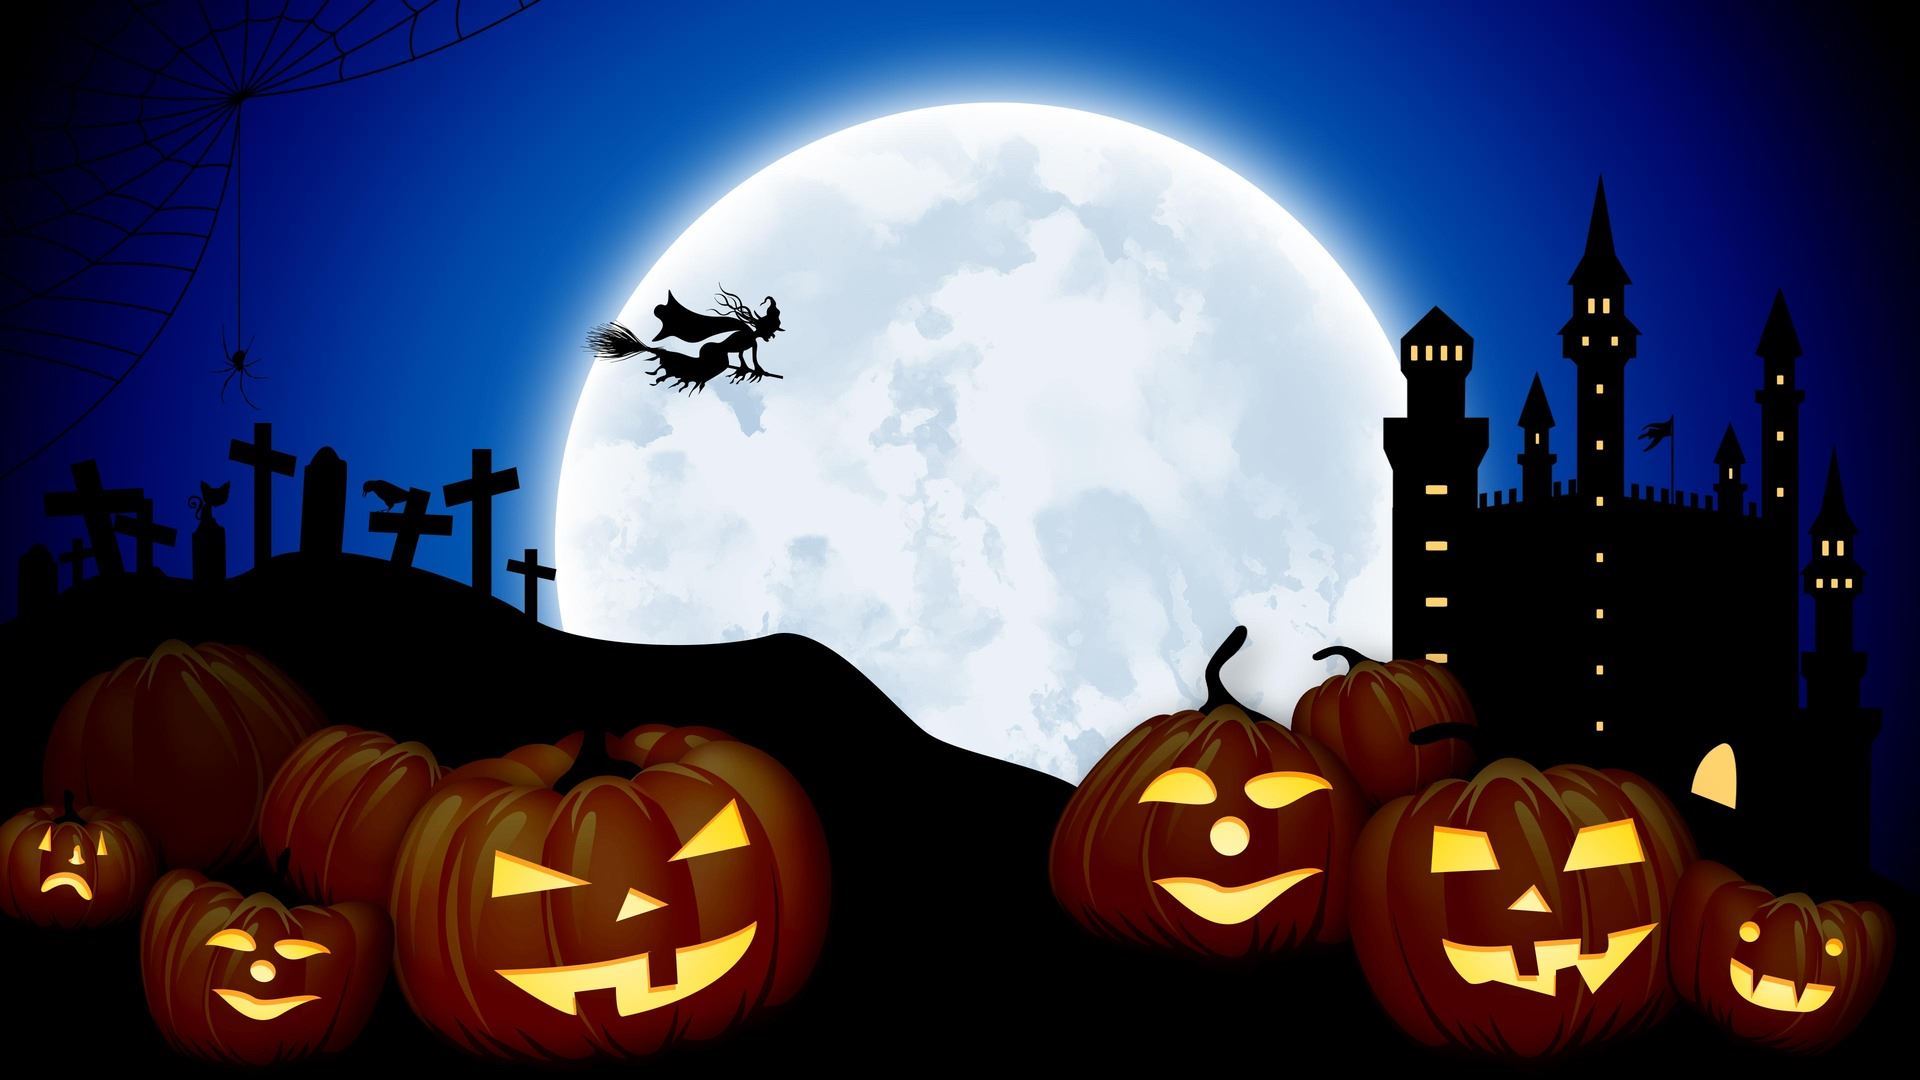 Download Free Halloween Wallpaper For Mac Os X El Capitan And Windows 10